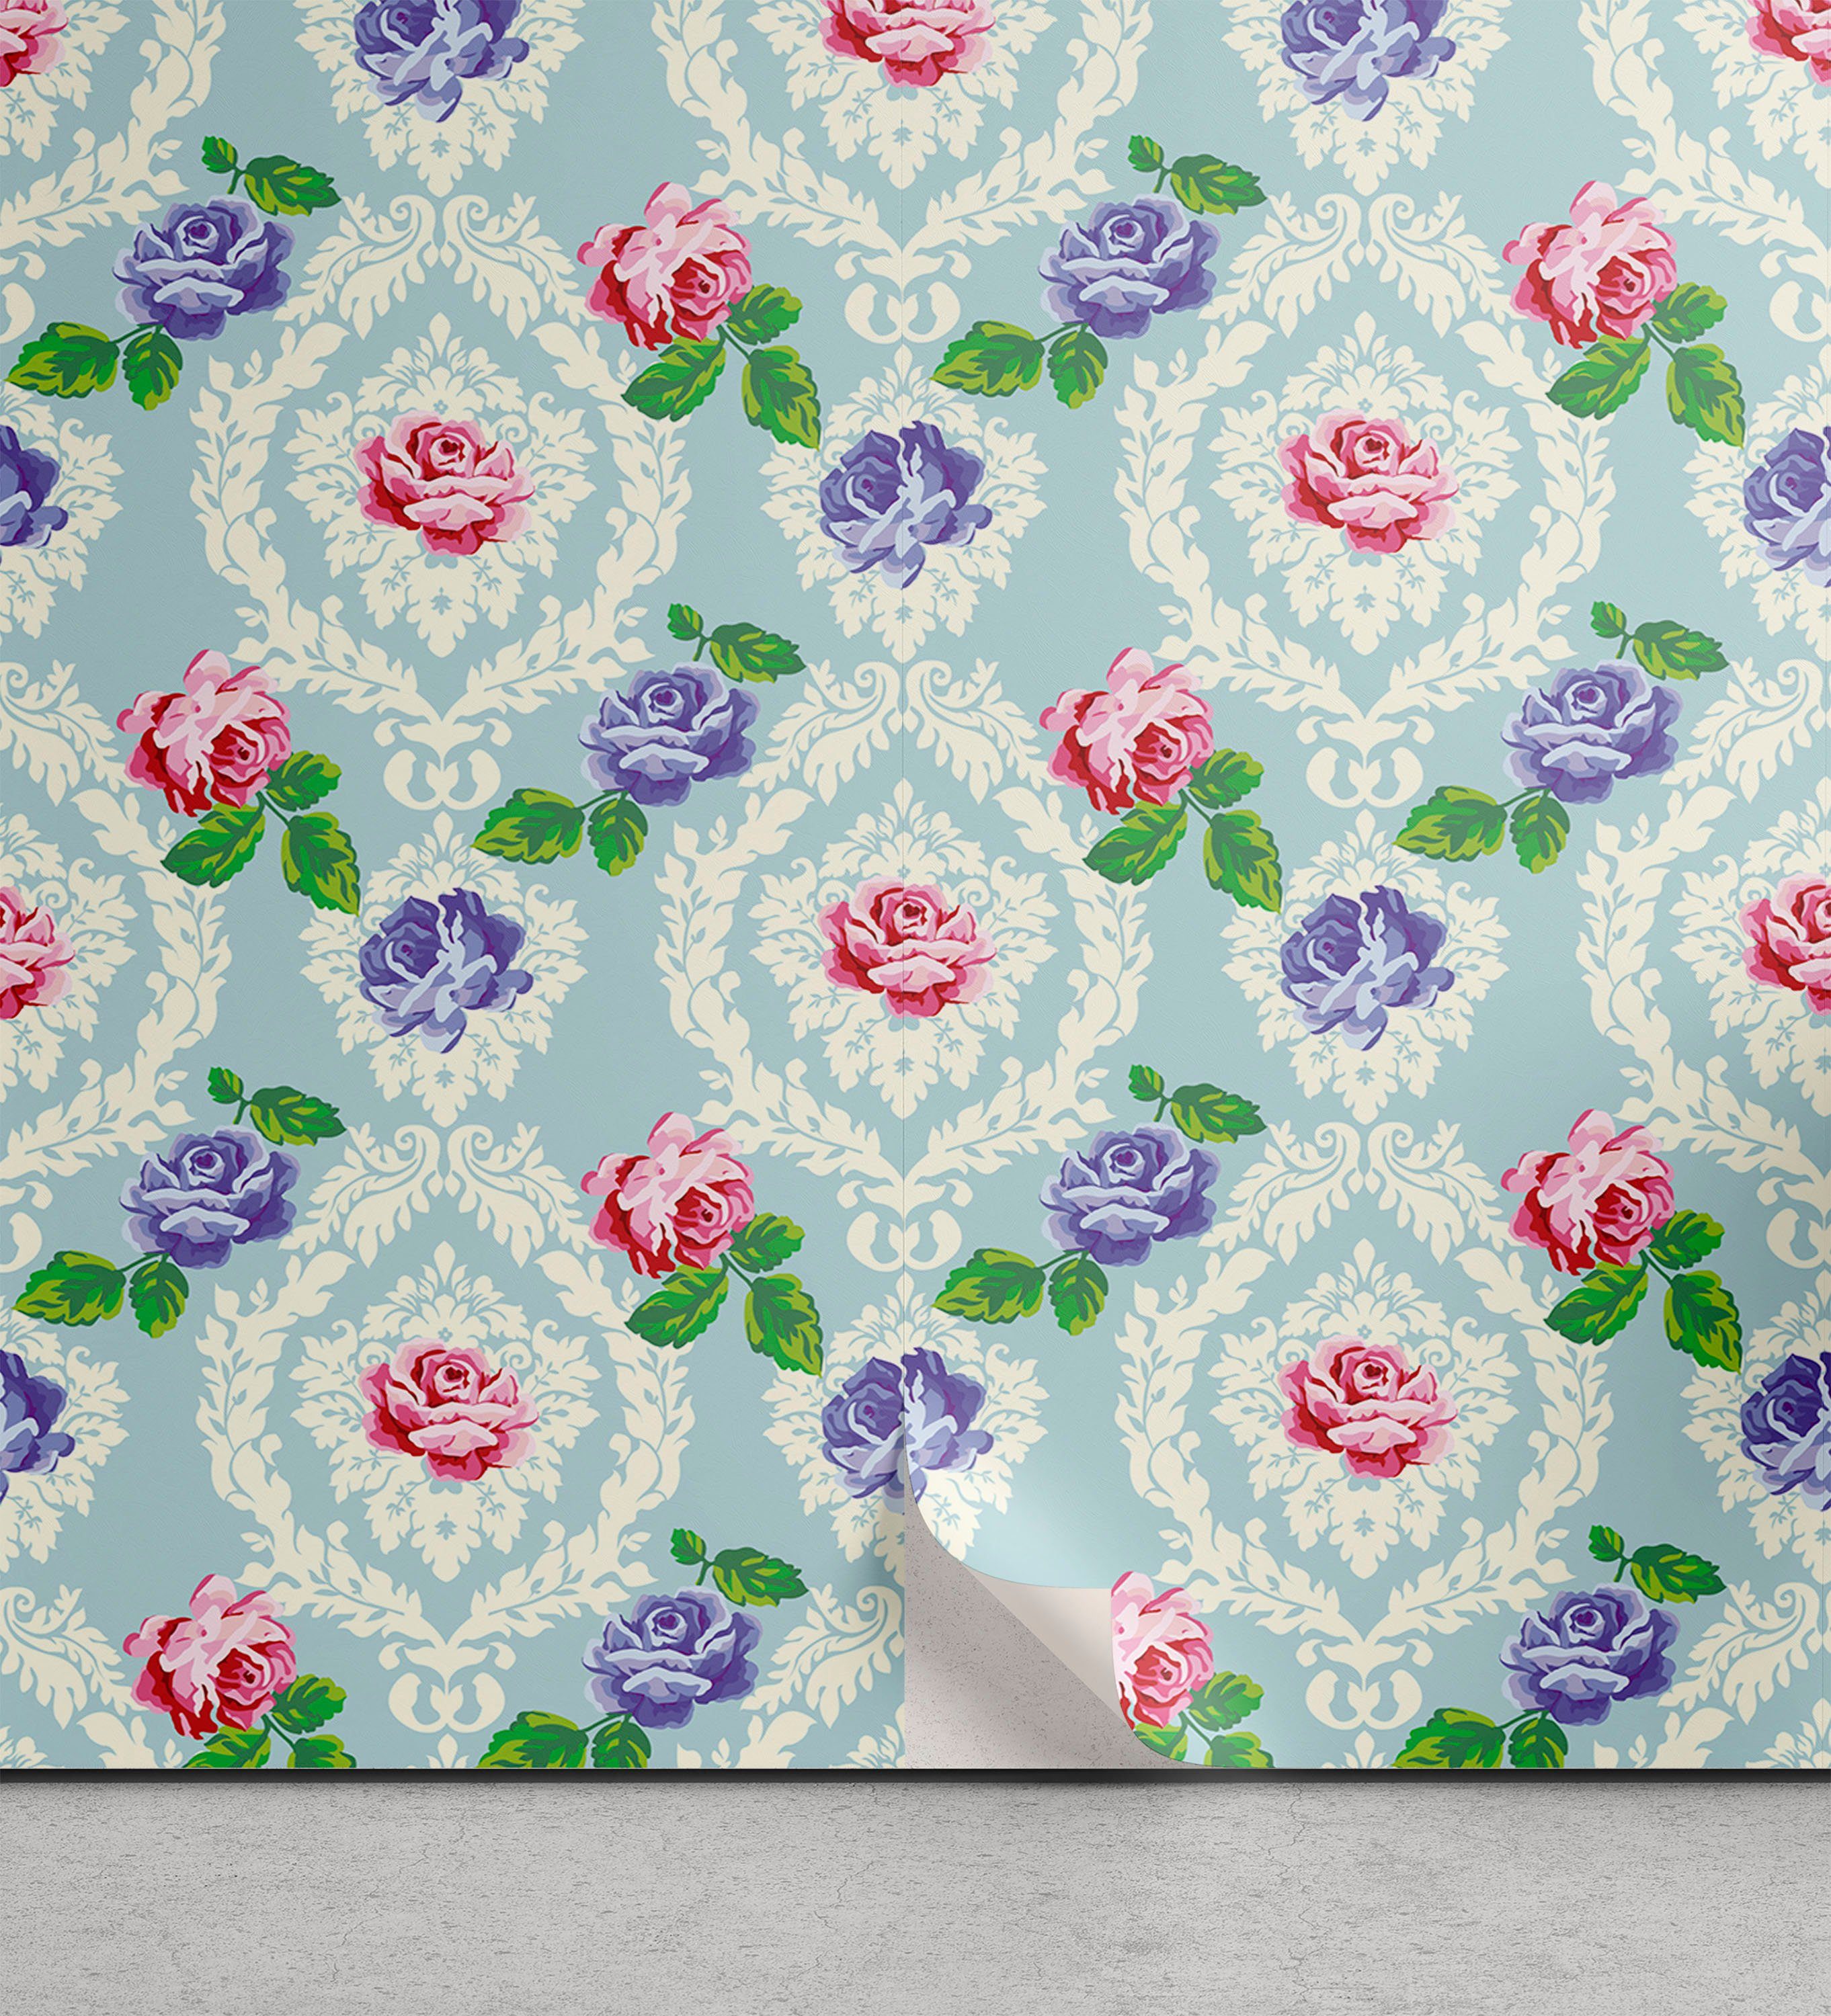 Abakuhaus Vinyltapete selbstklebendes Rosen Floral farbige Küchenakzent, Wohnzimmer Barock